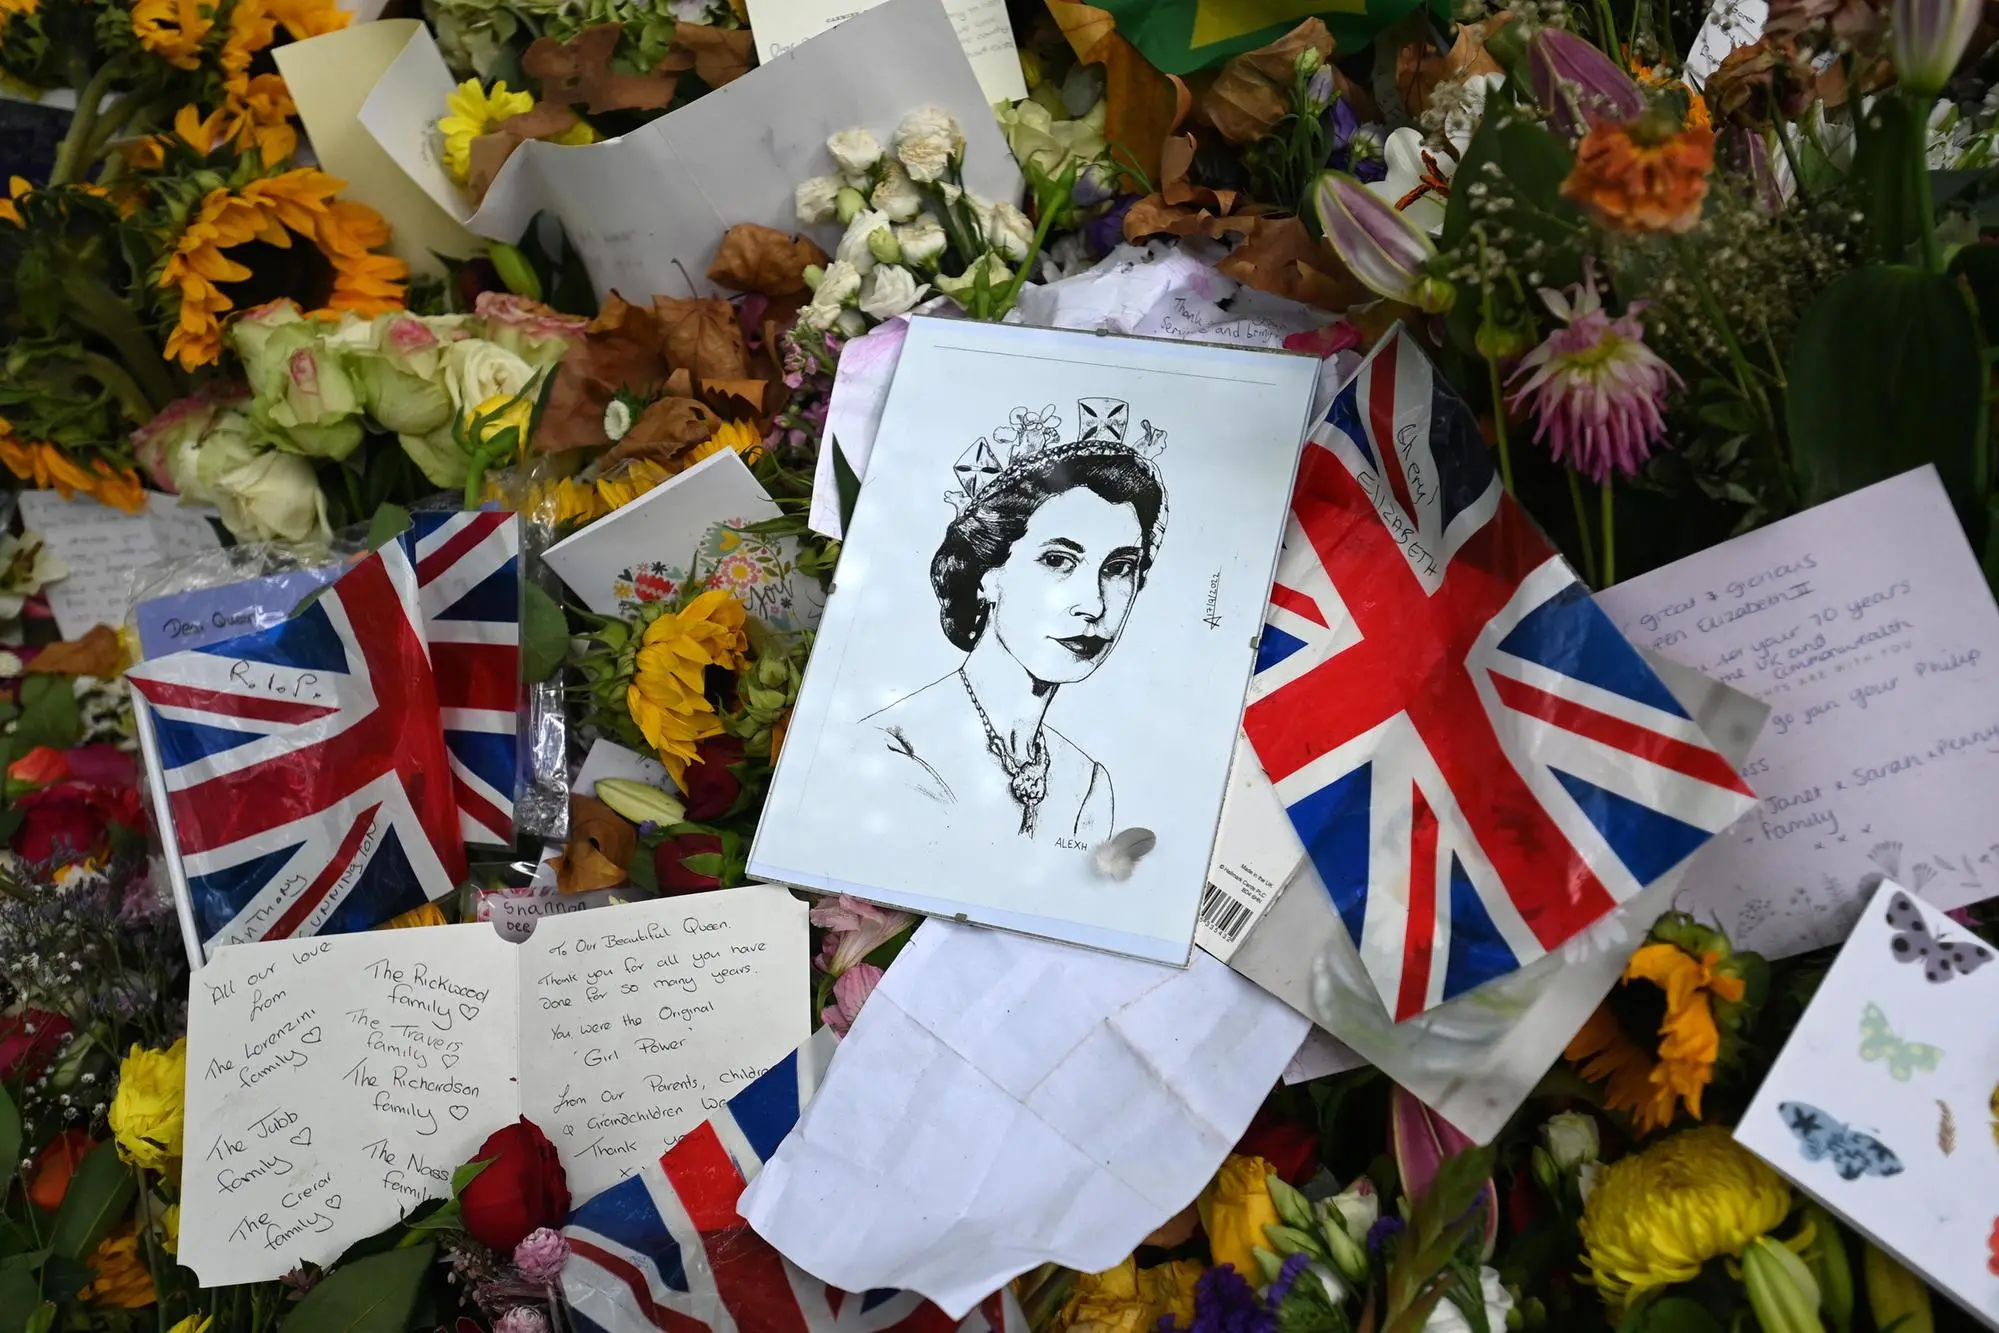 Omaggi floreali per la regina Elisabetta fuori da Buckingham Palace (Ansa - Epa, Rain)